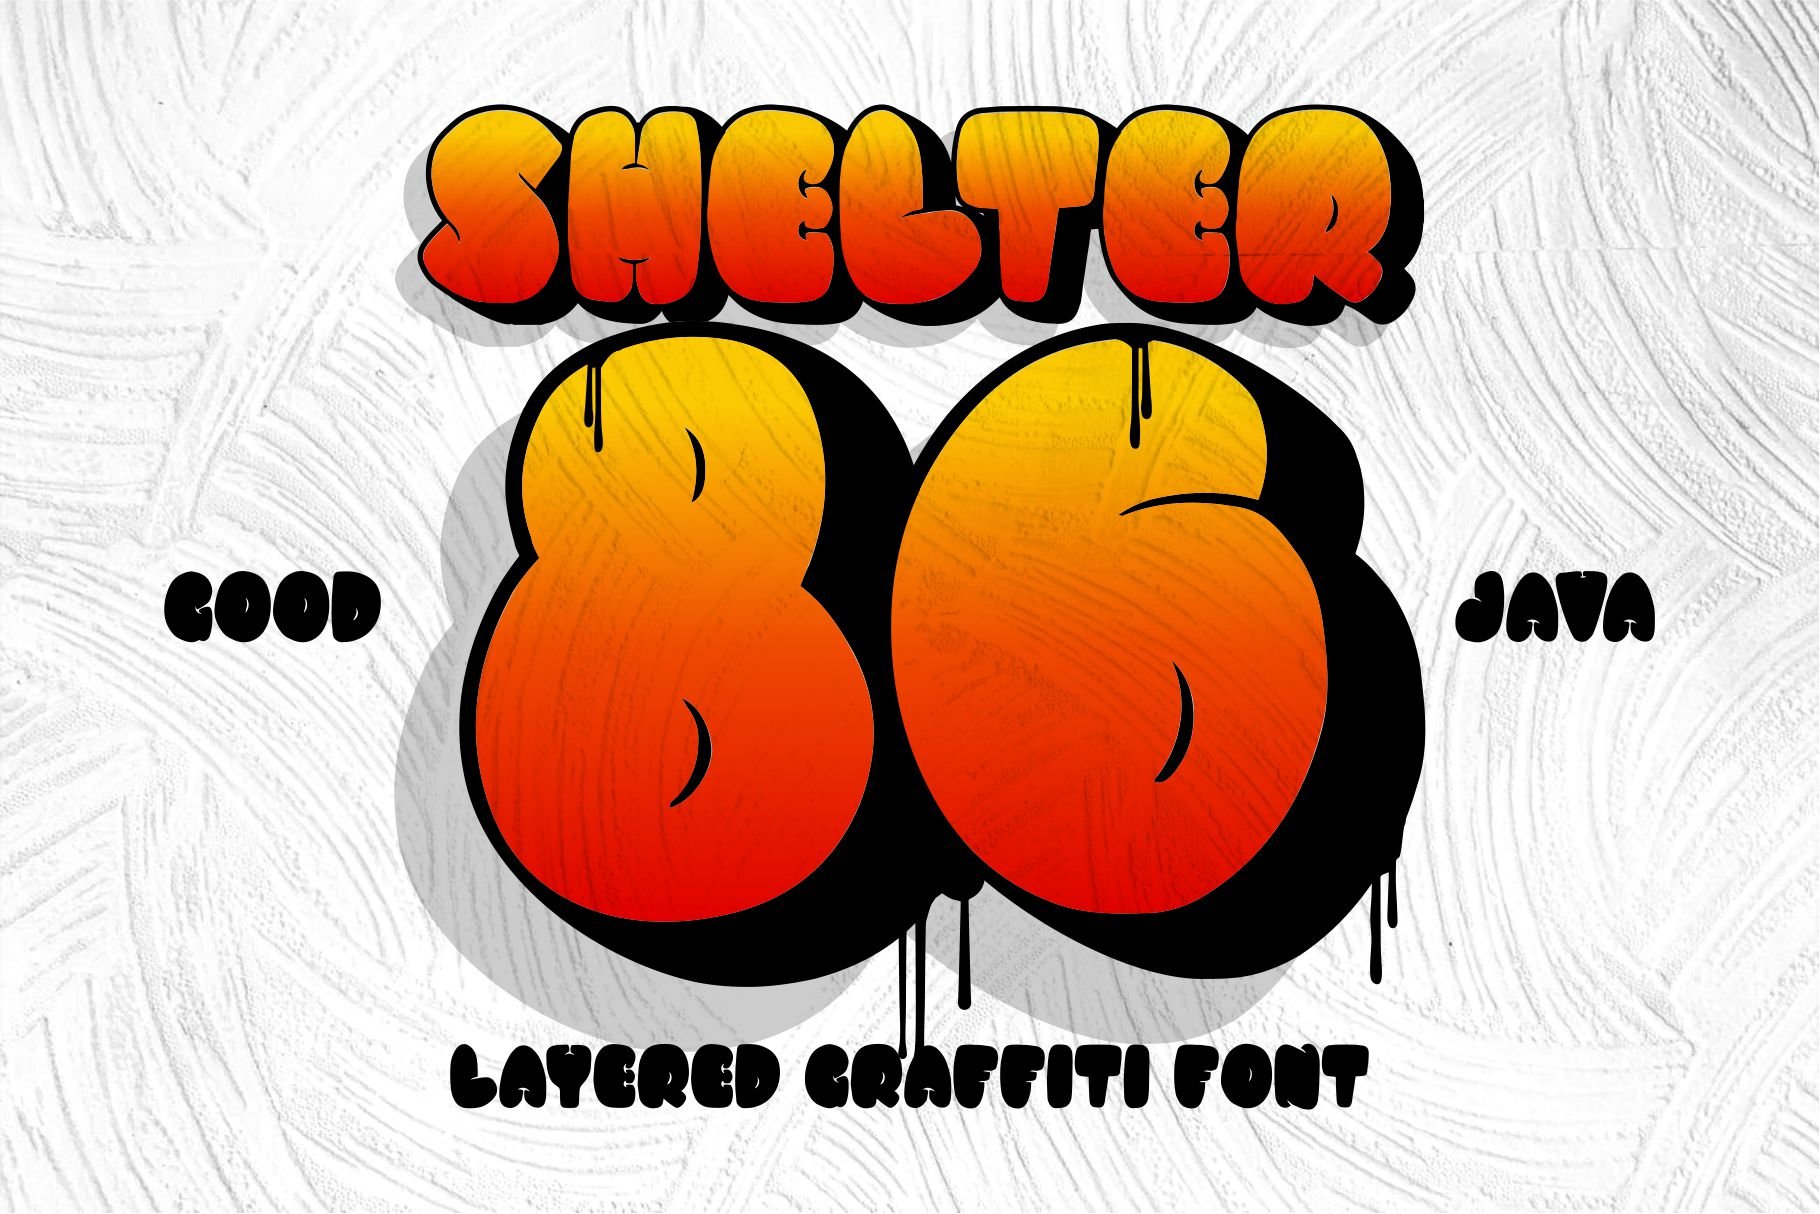 SHELTER 86 - Bold Graffiti cover image.